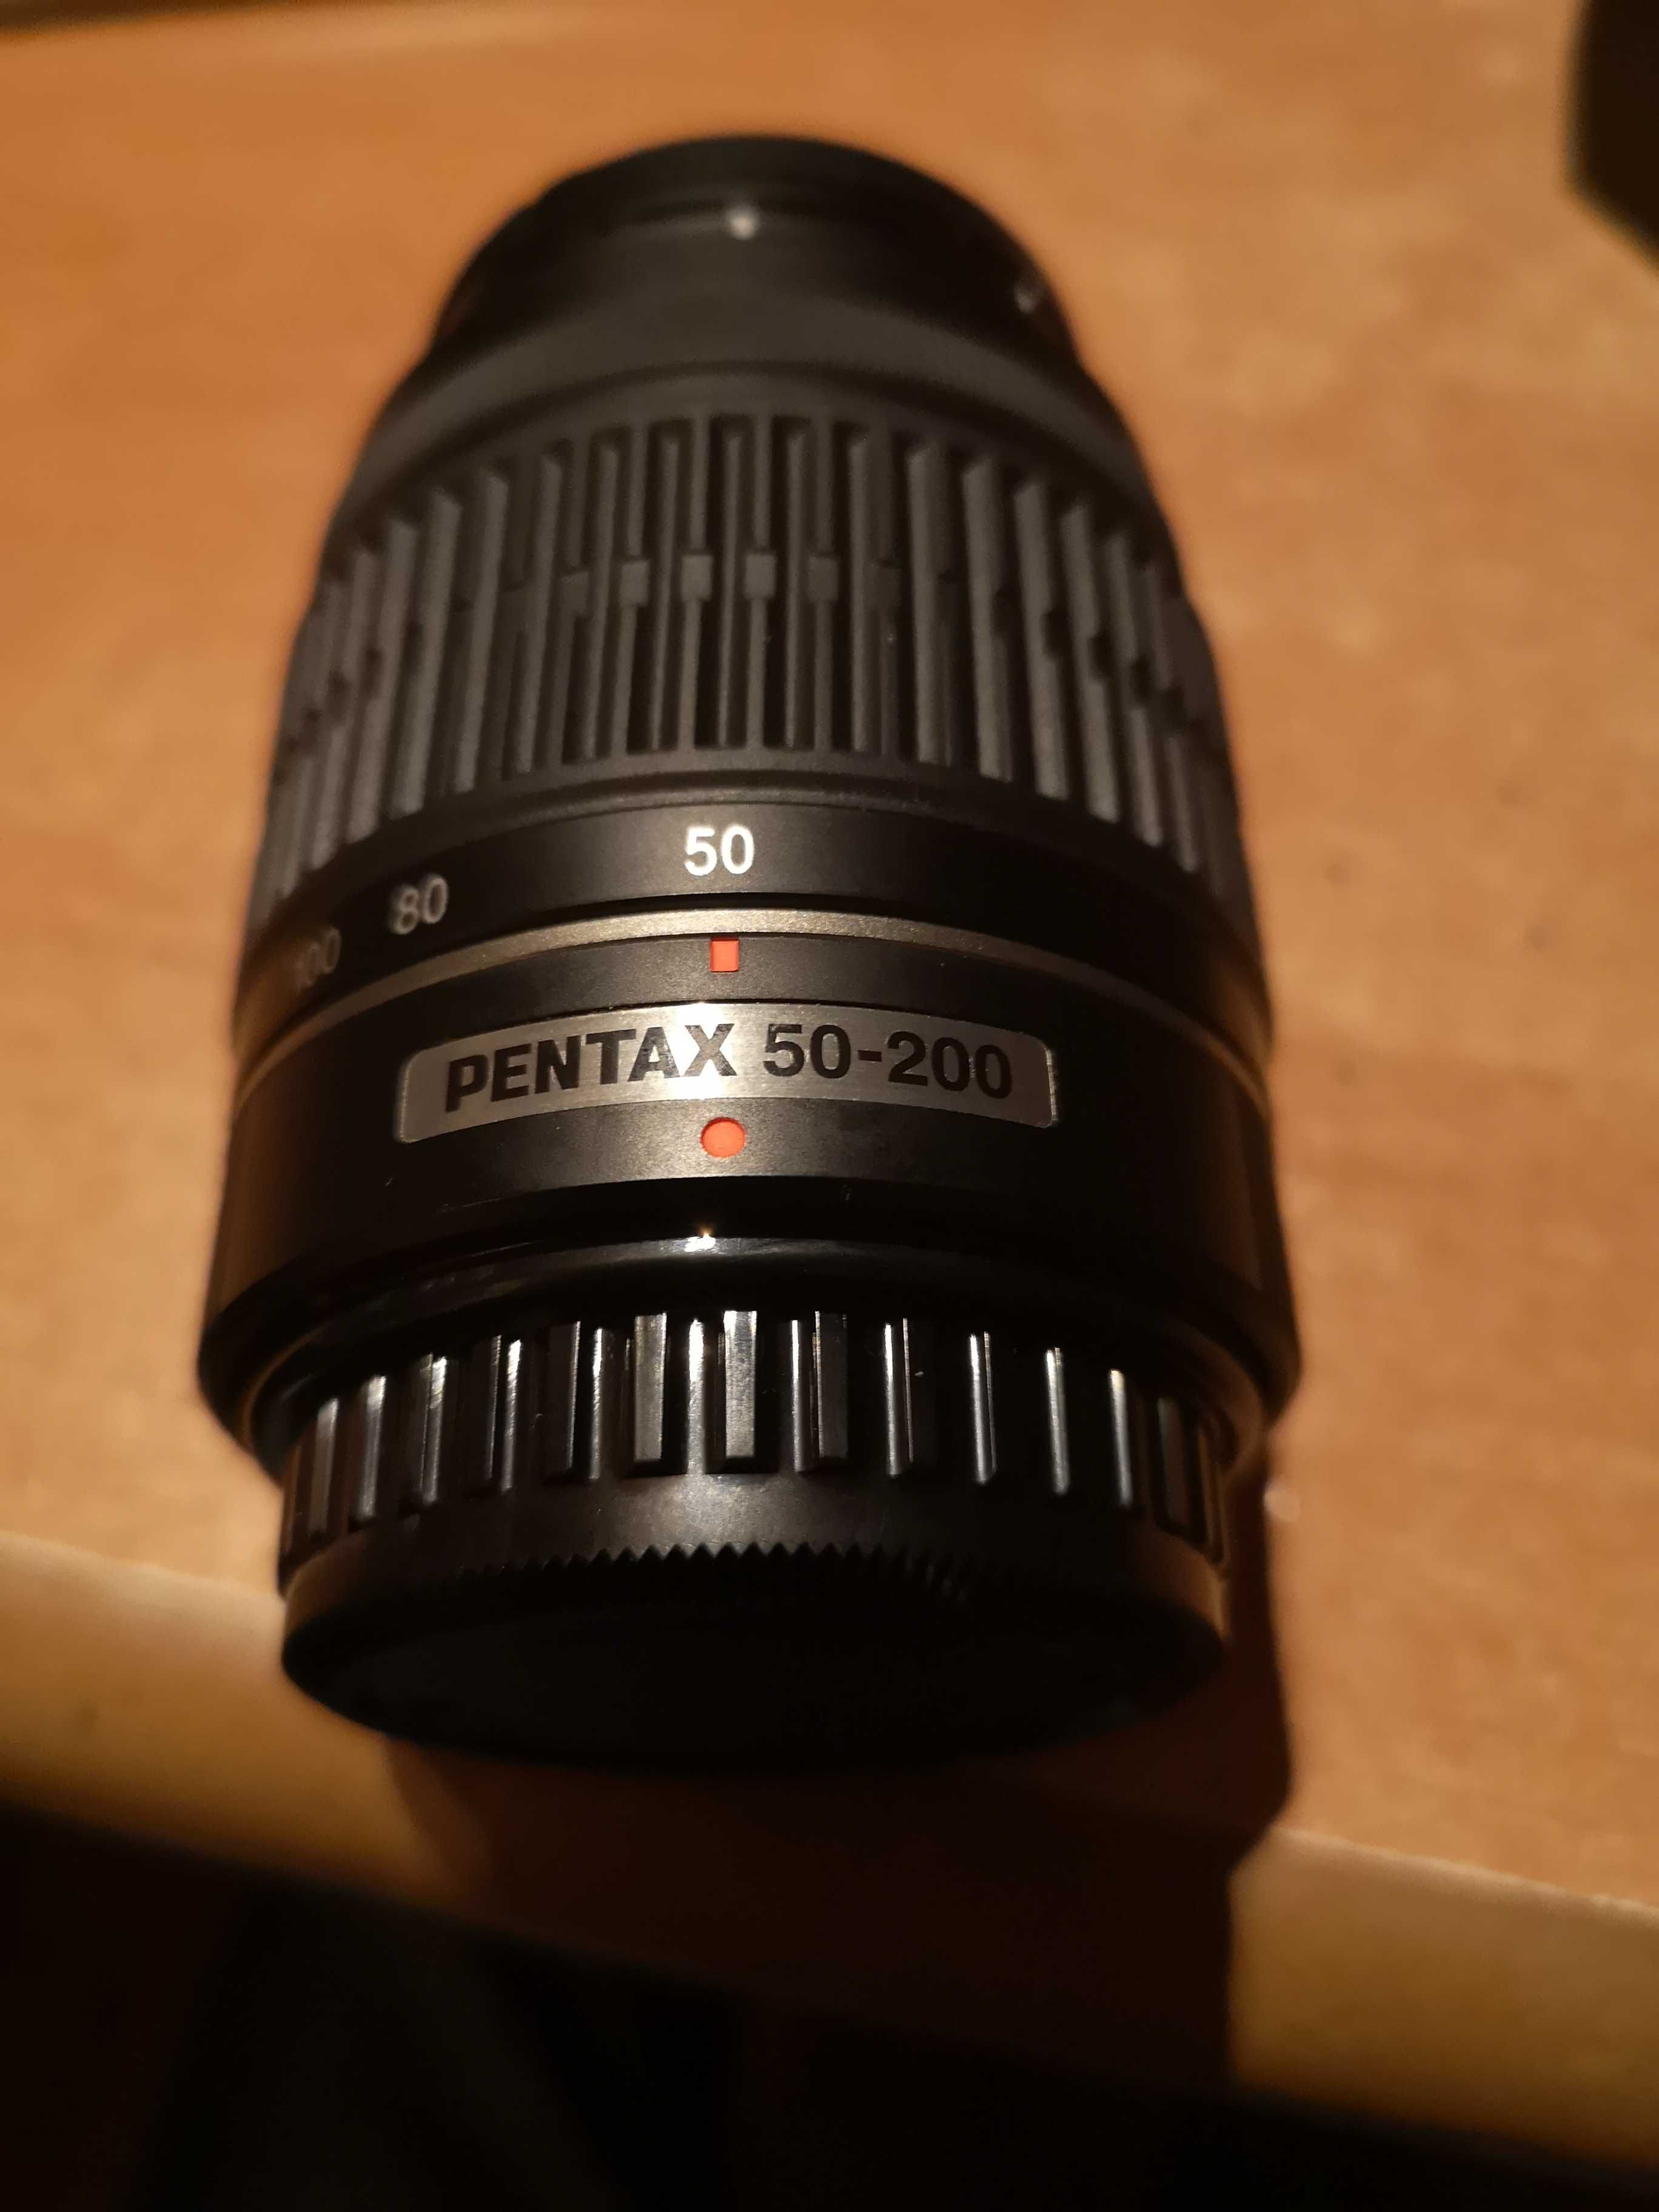 Objectiva Pentax 50-200 mm